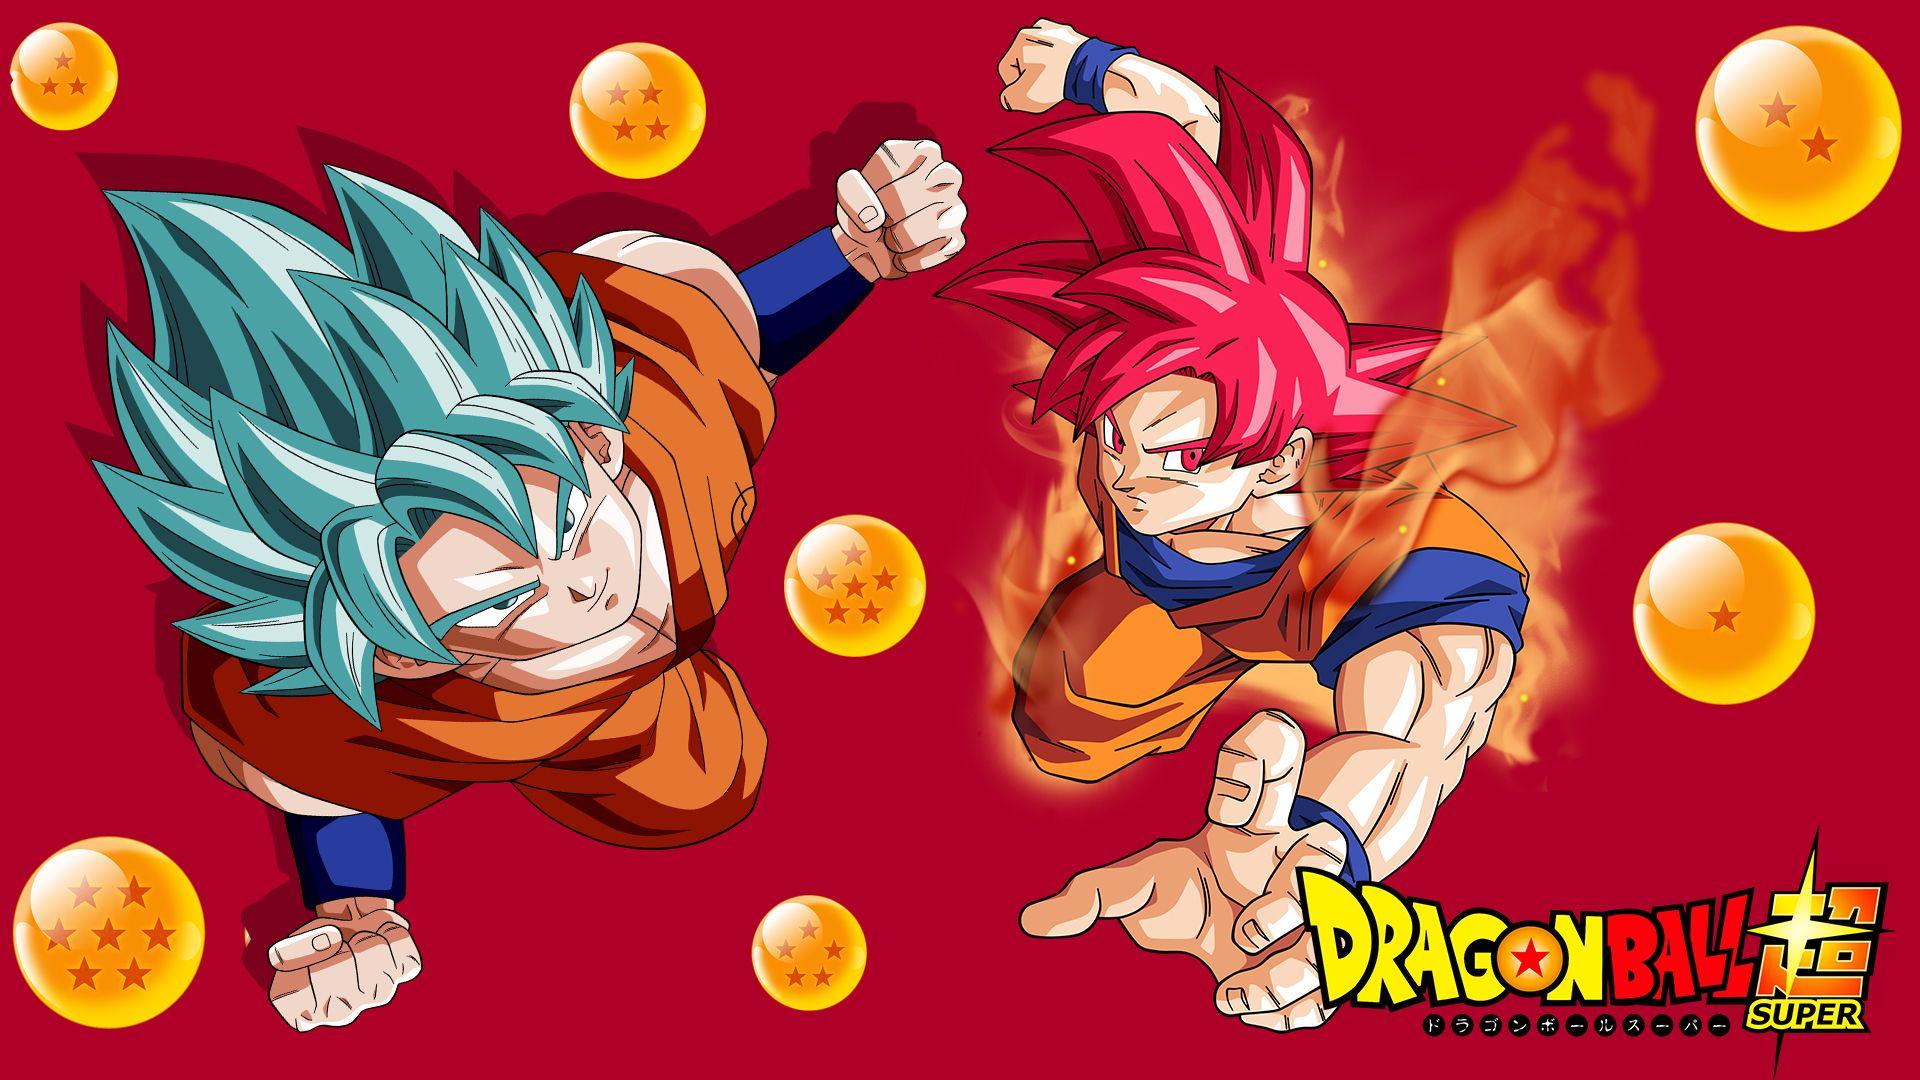 Dragon Ball Super Anime Full HD Wallpaper.com